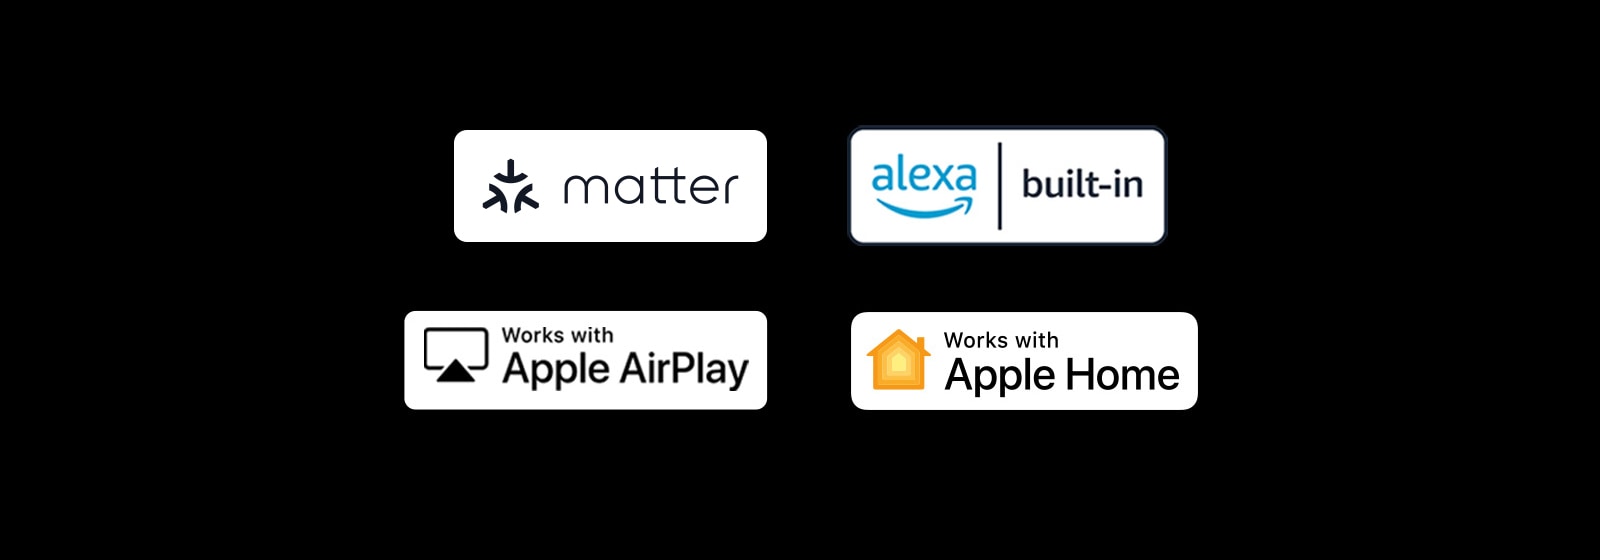 لوگوی alexa built-in لوگوی پشتیبانی از Apple AirPlay لوگوی پشتیبانی از Apple Home